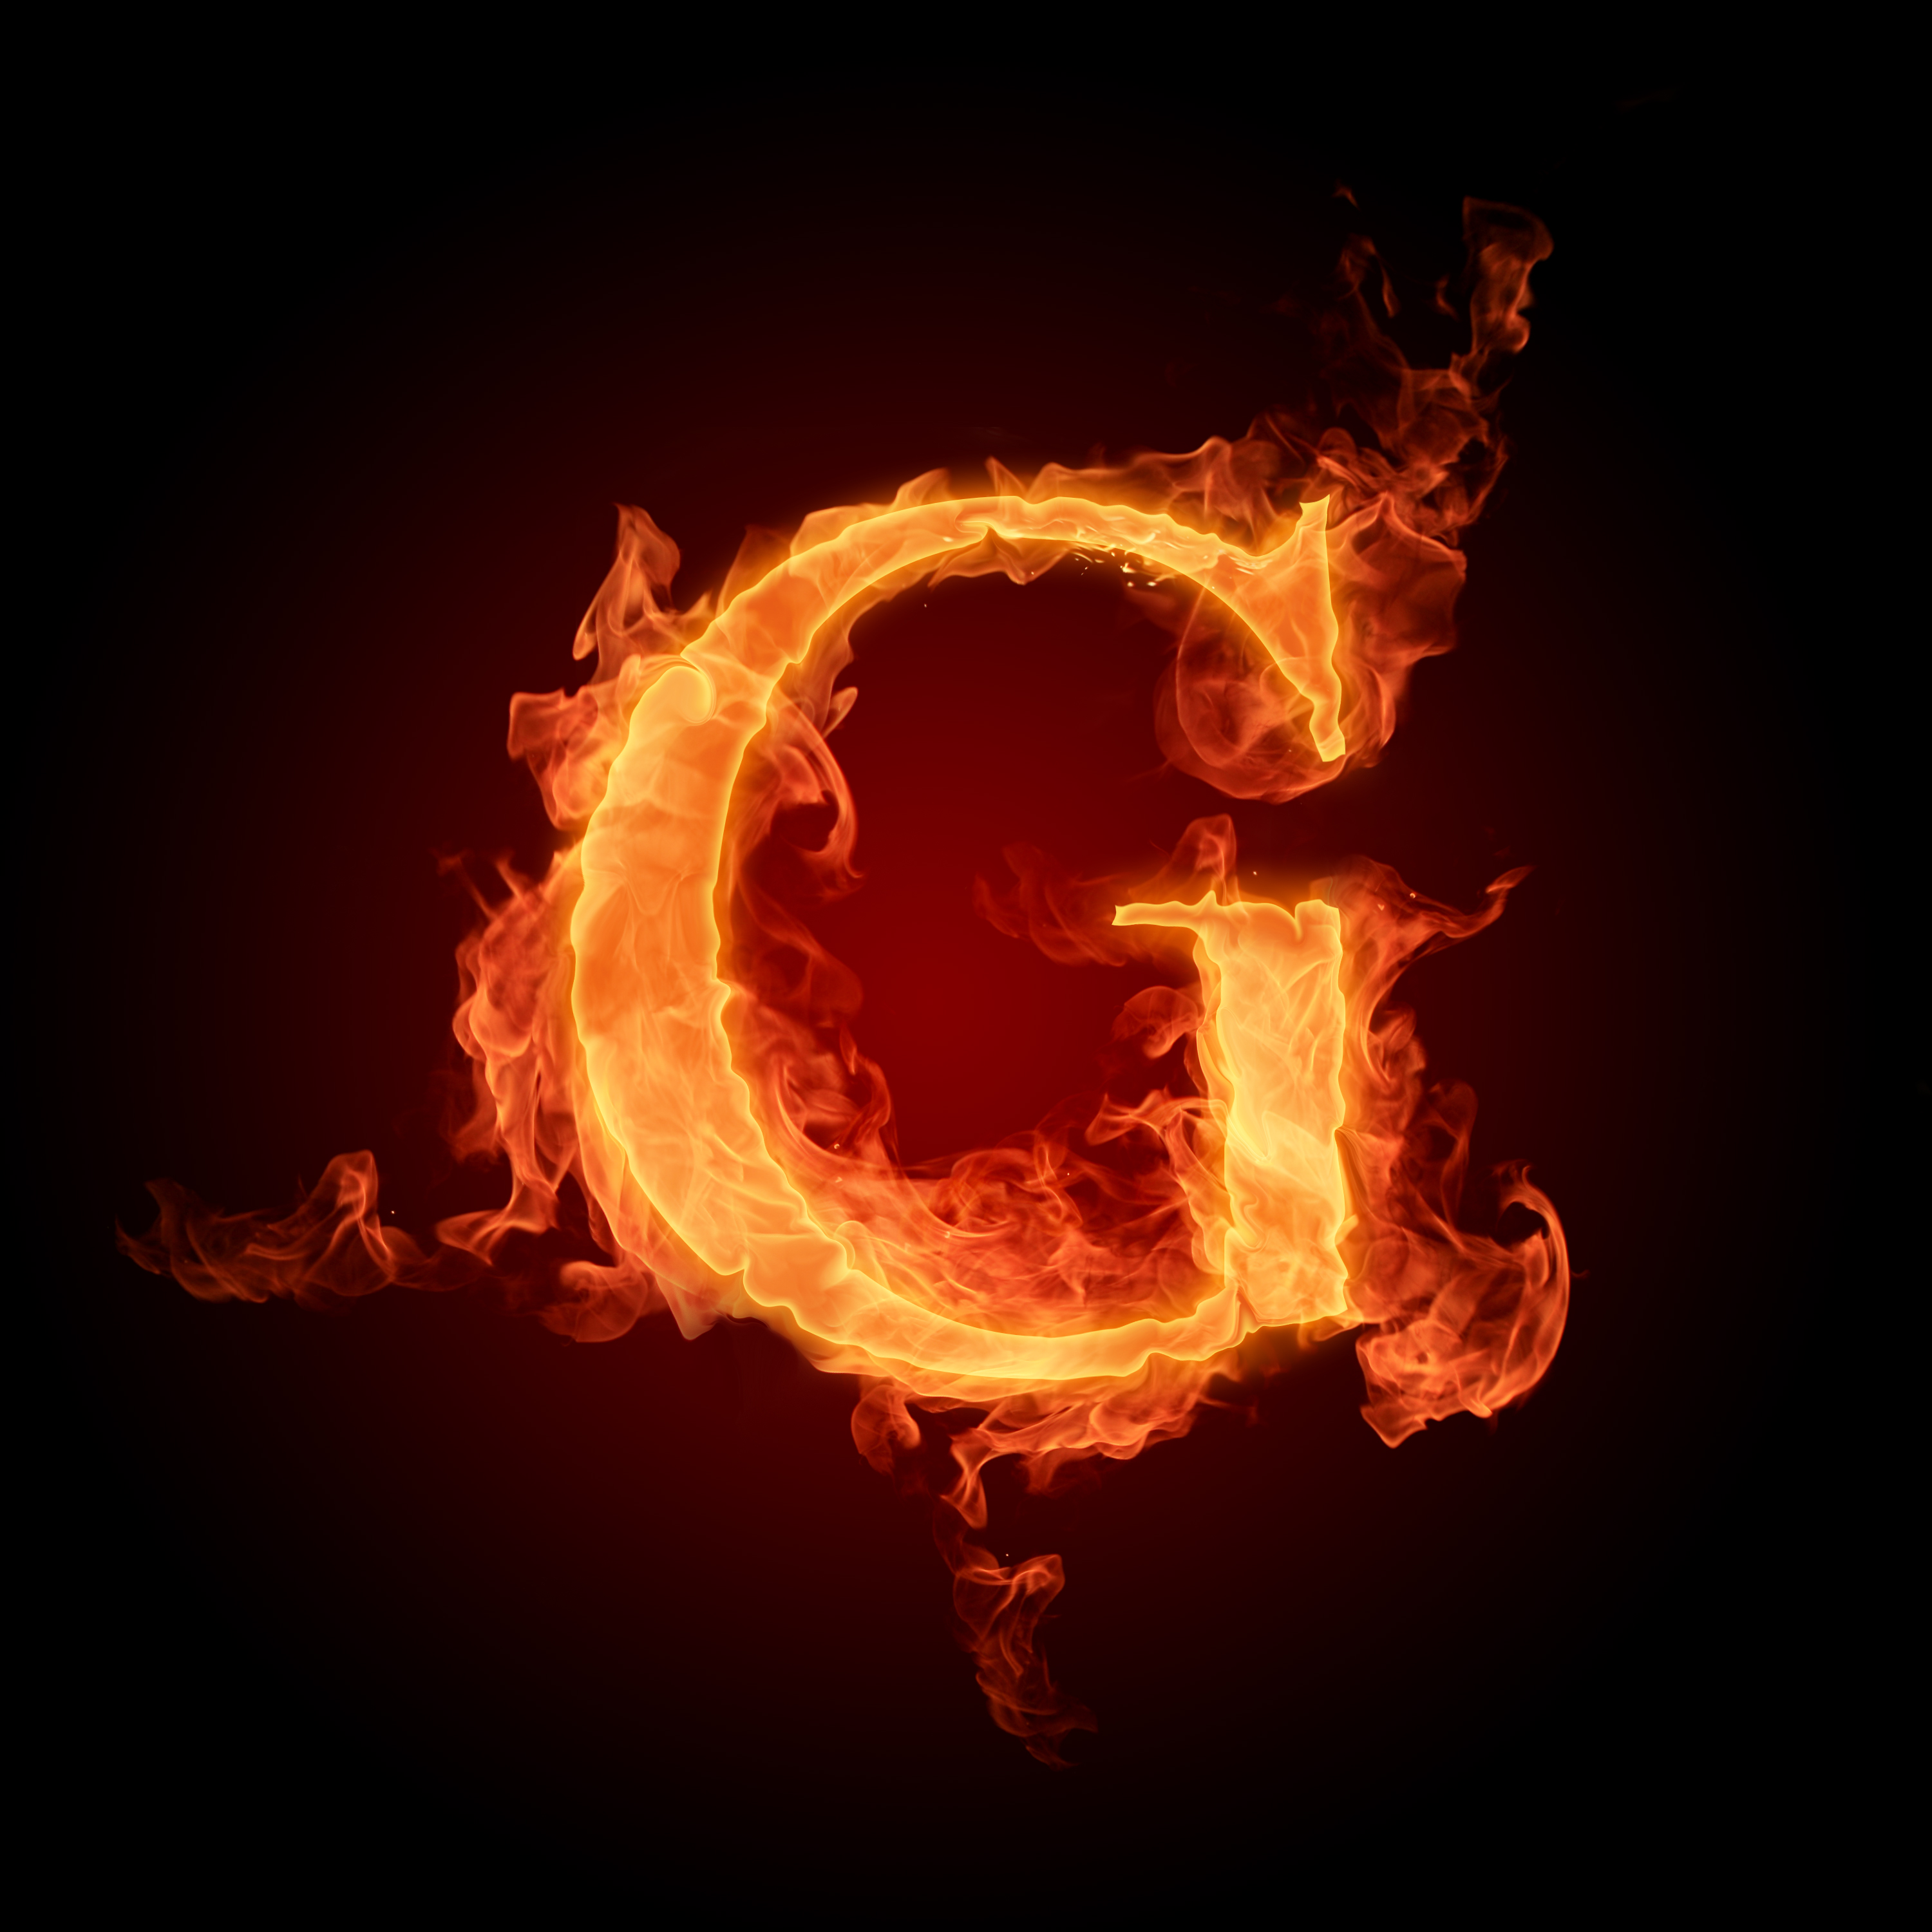 Д3 16. Огненные буквы. Буква g. Огненная буква g. Горящие буквы.